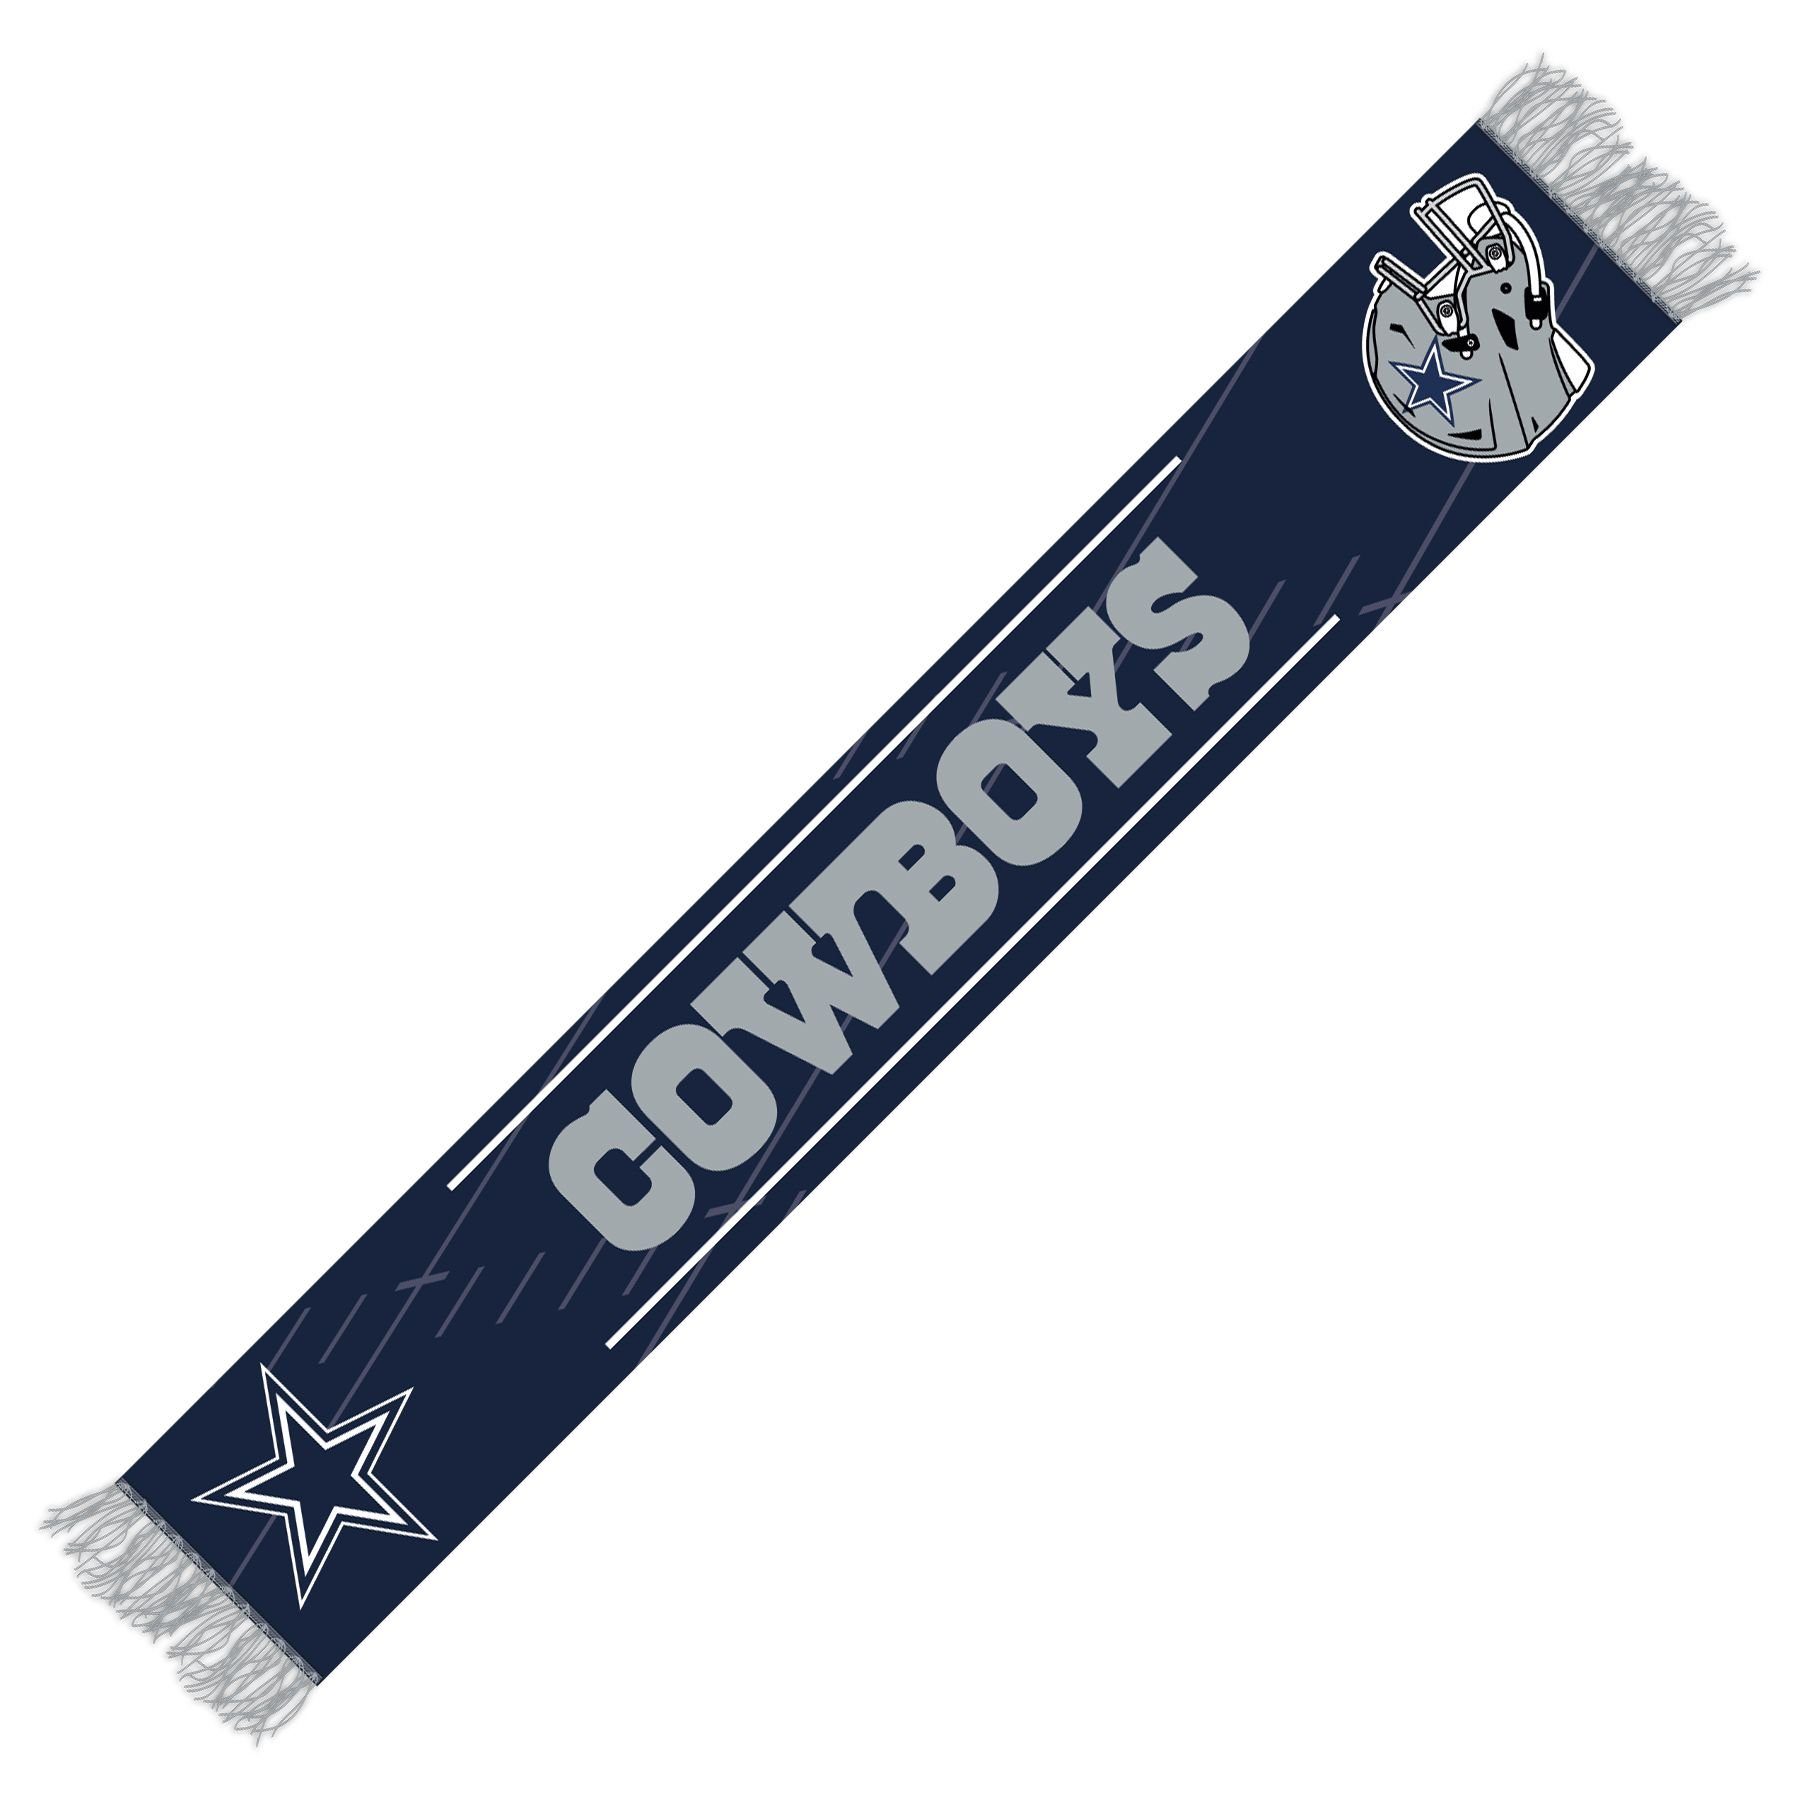 Cowboys Teams Great Branding Branding Great NFL Multifunktionstuch Dallas